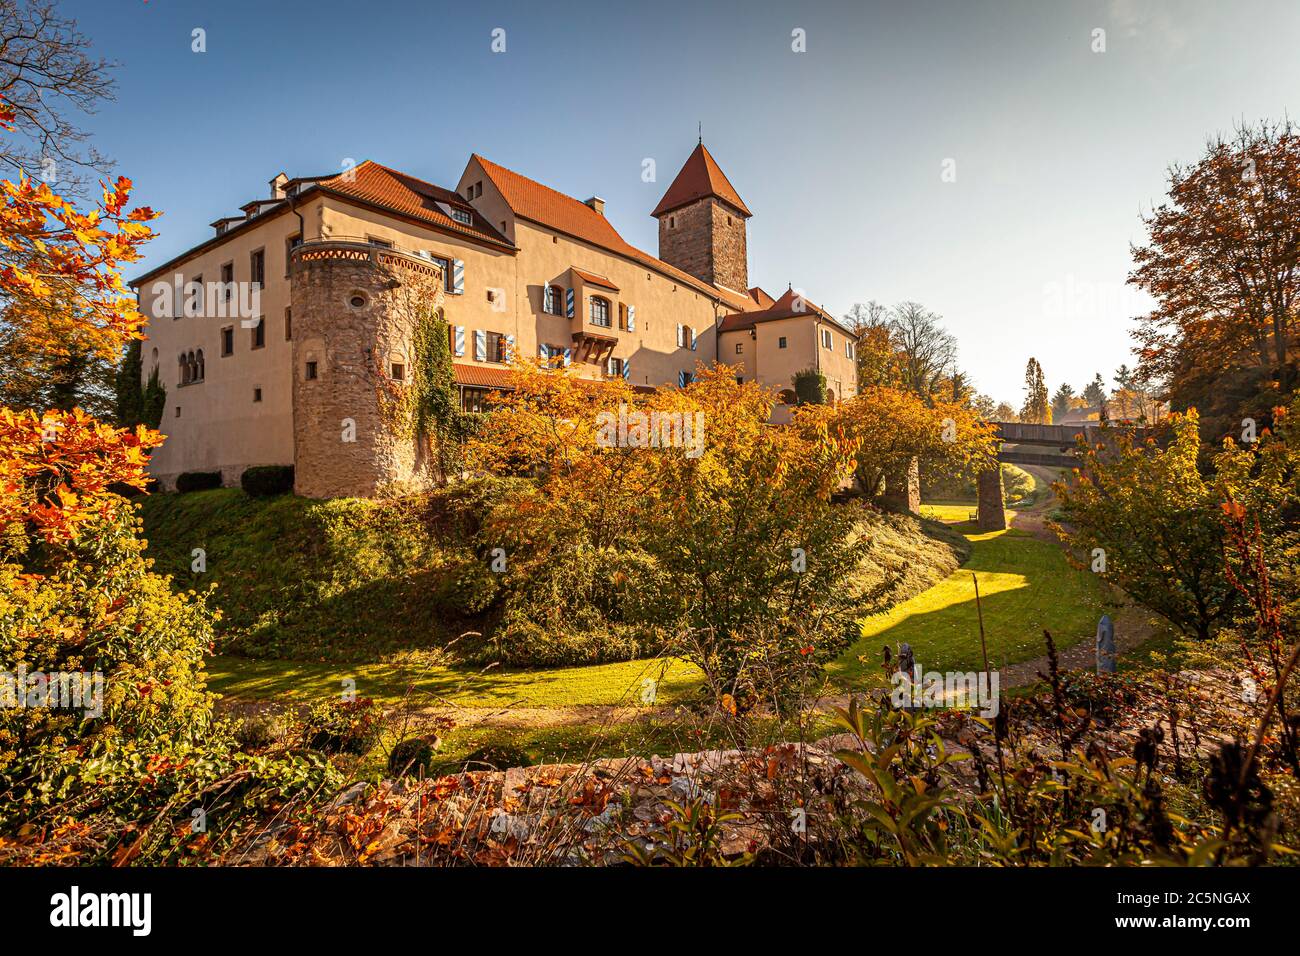 Wernberg castle in Wernberg-Köblitz, Germany Stock Photo